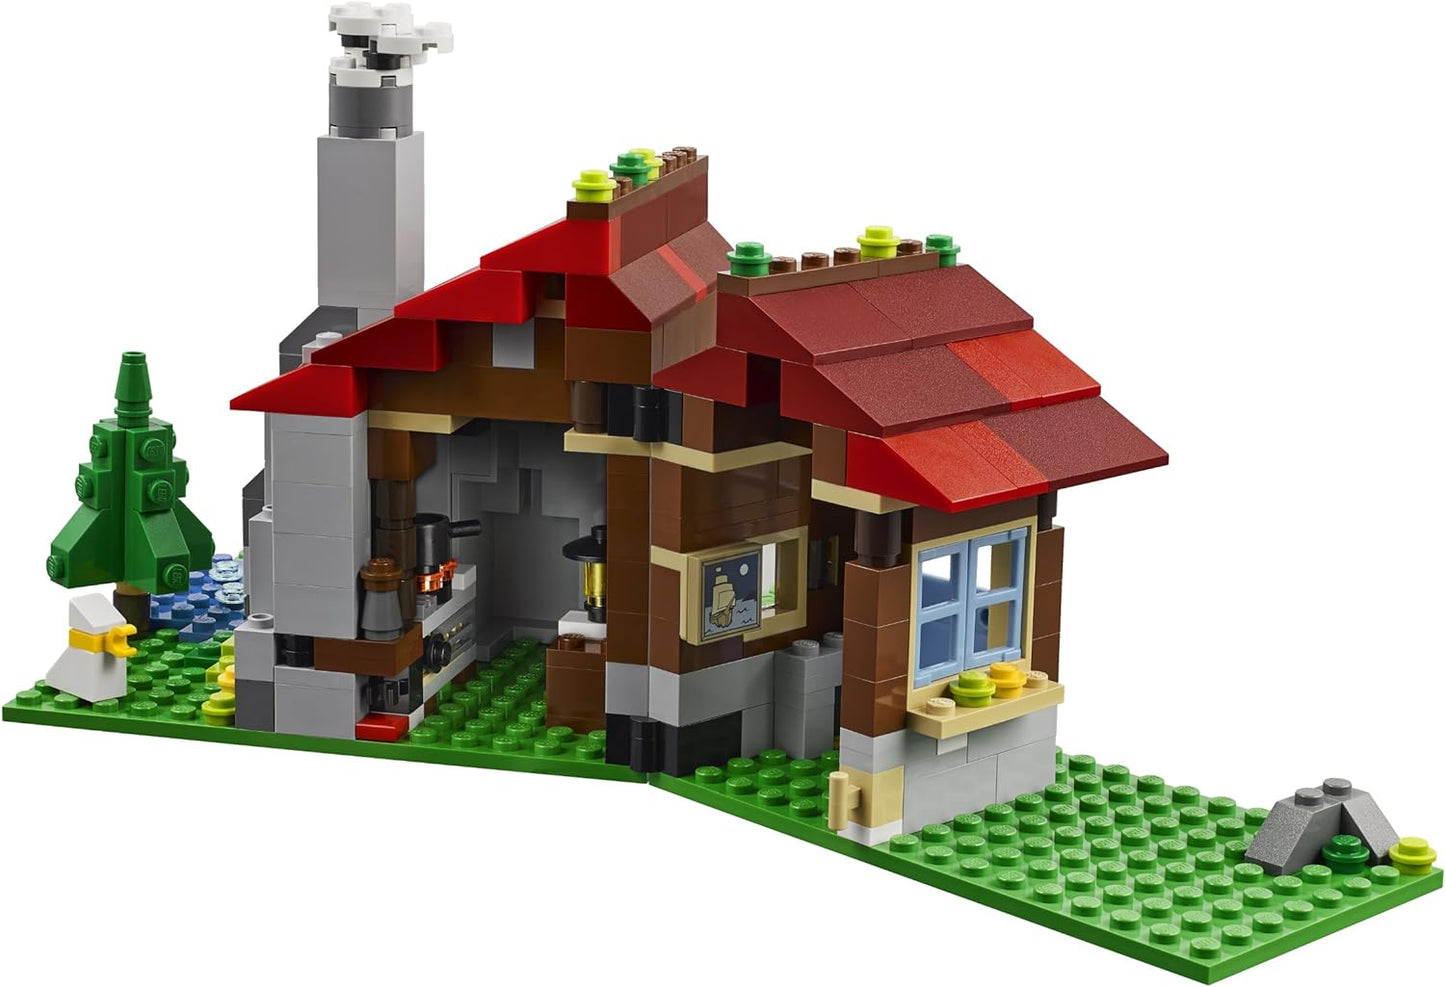 LEGO Creator 21026 Mountain Hut